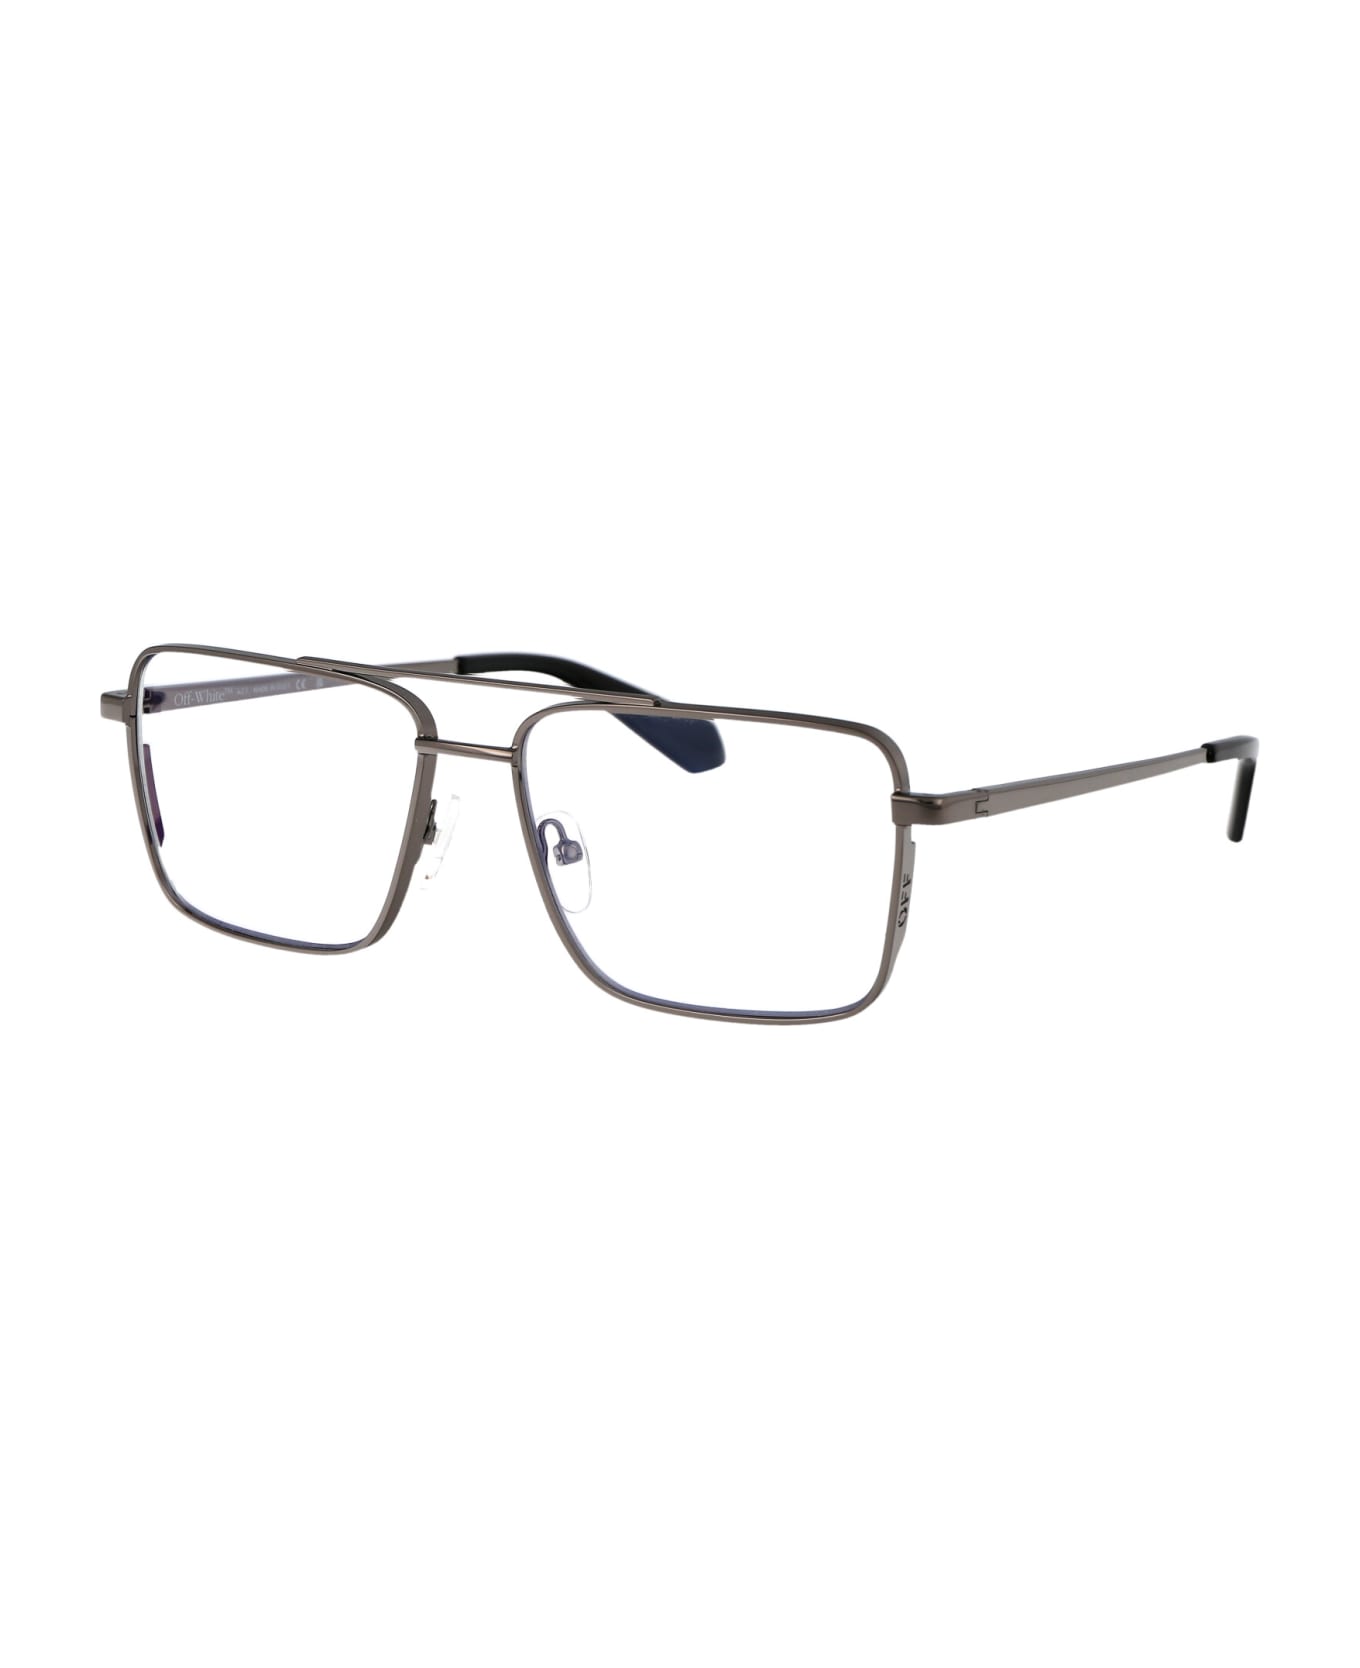 Off-White Optical Style 66 Glasses - 7700 GUNMETAL 